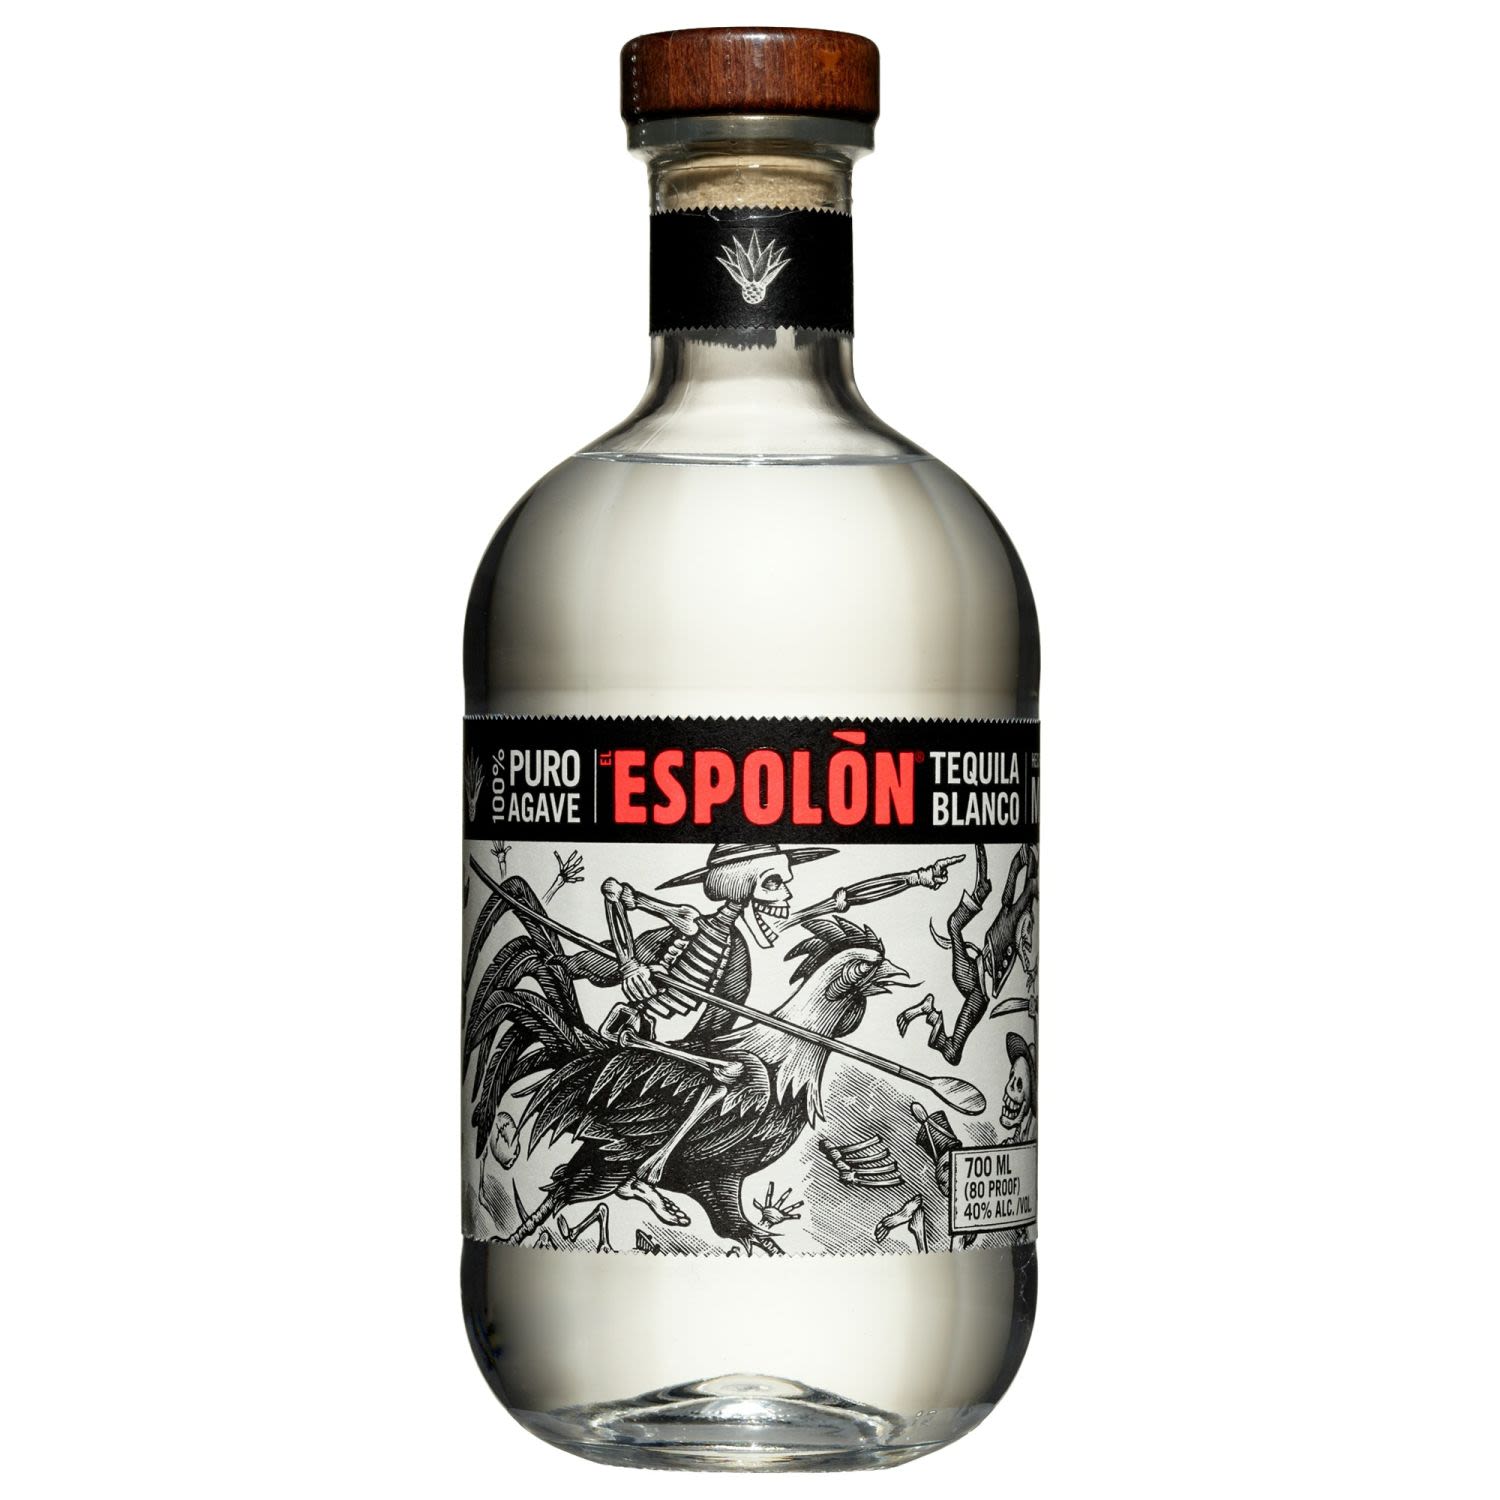 Espolon Tequila Blanco 700mL Bottle